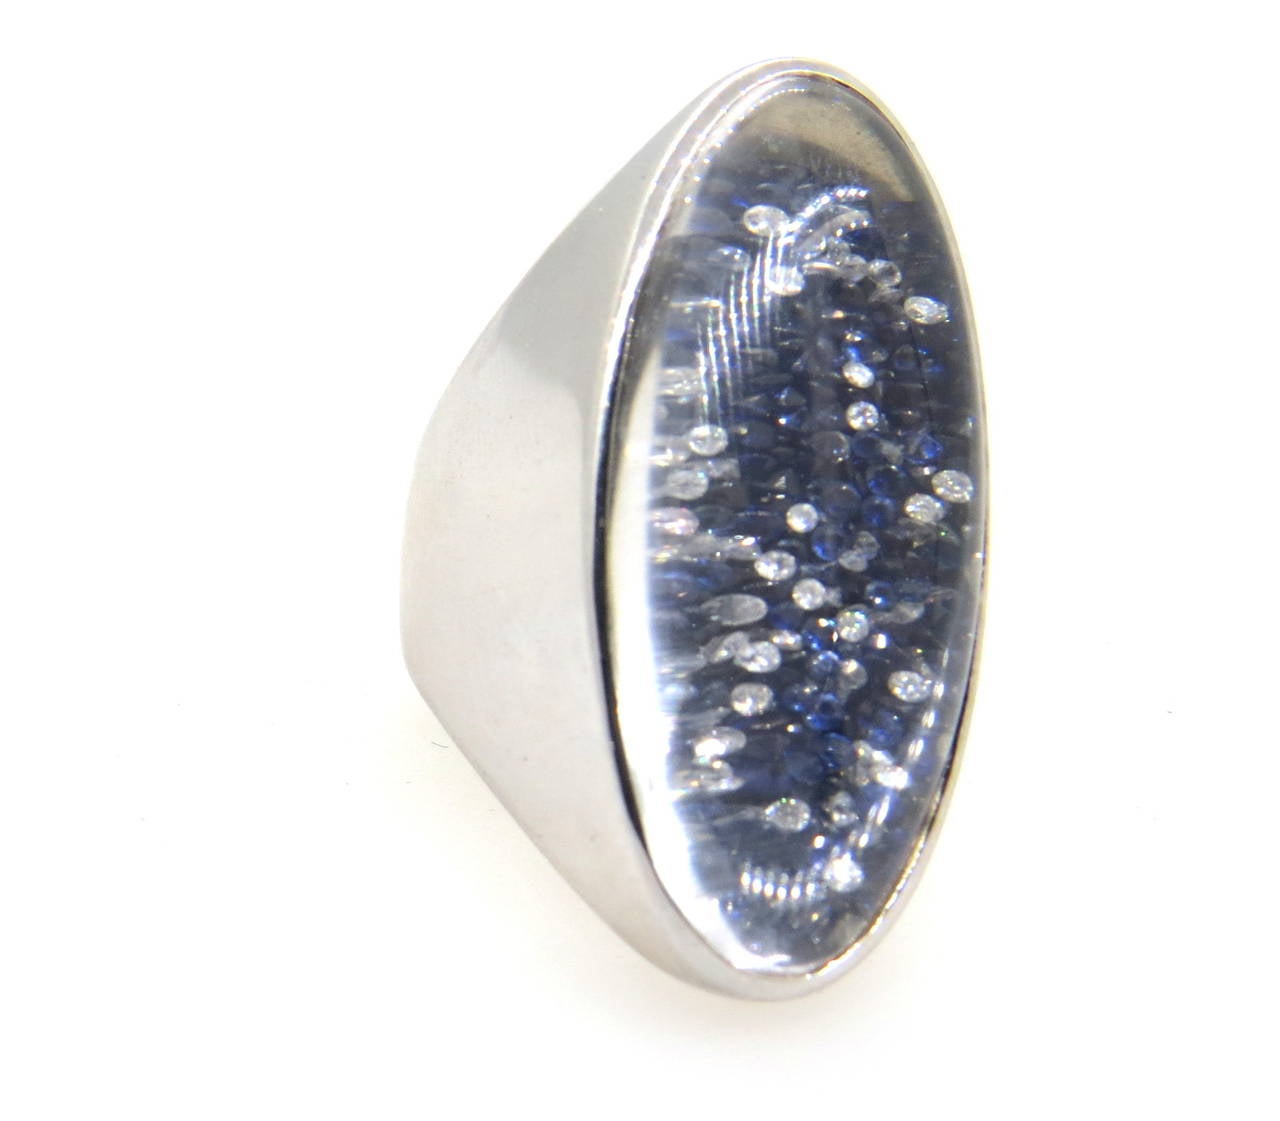 Impressive Mattia Cielo Camaleonte Diamond Sapphire Large Gold Ring 2